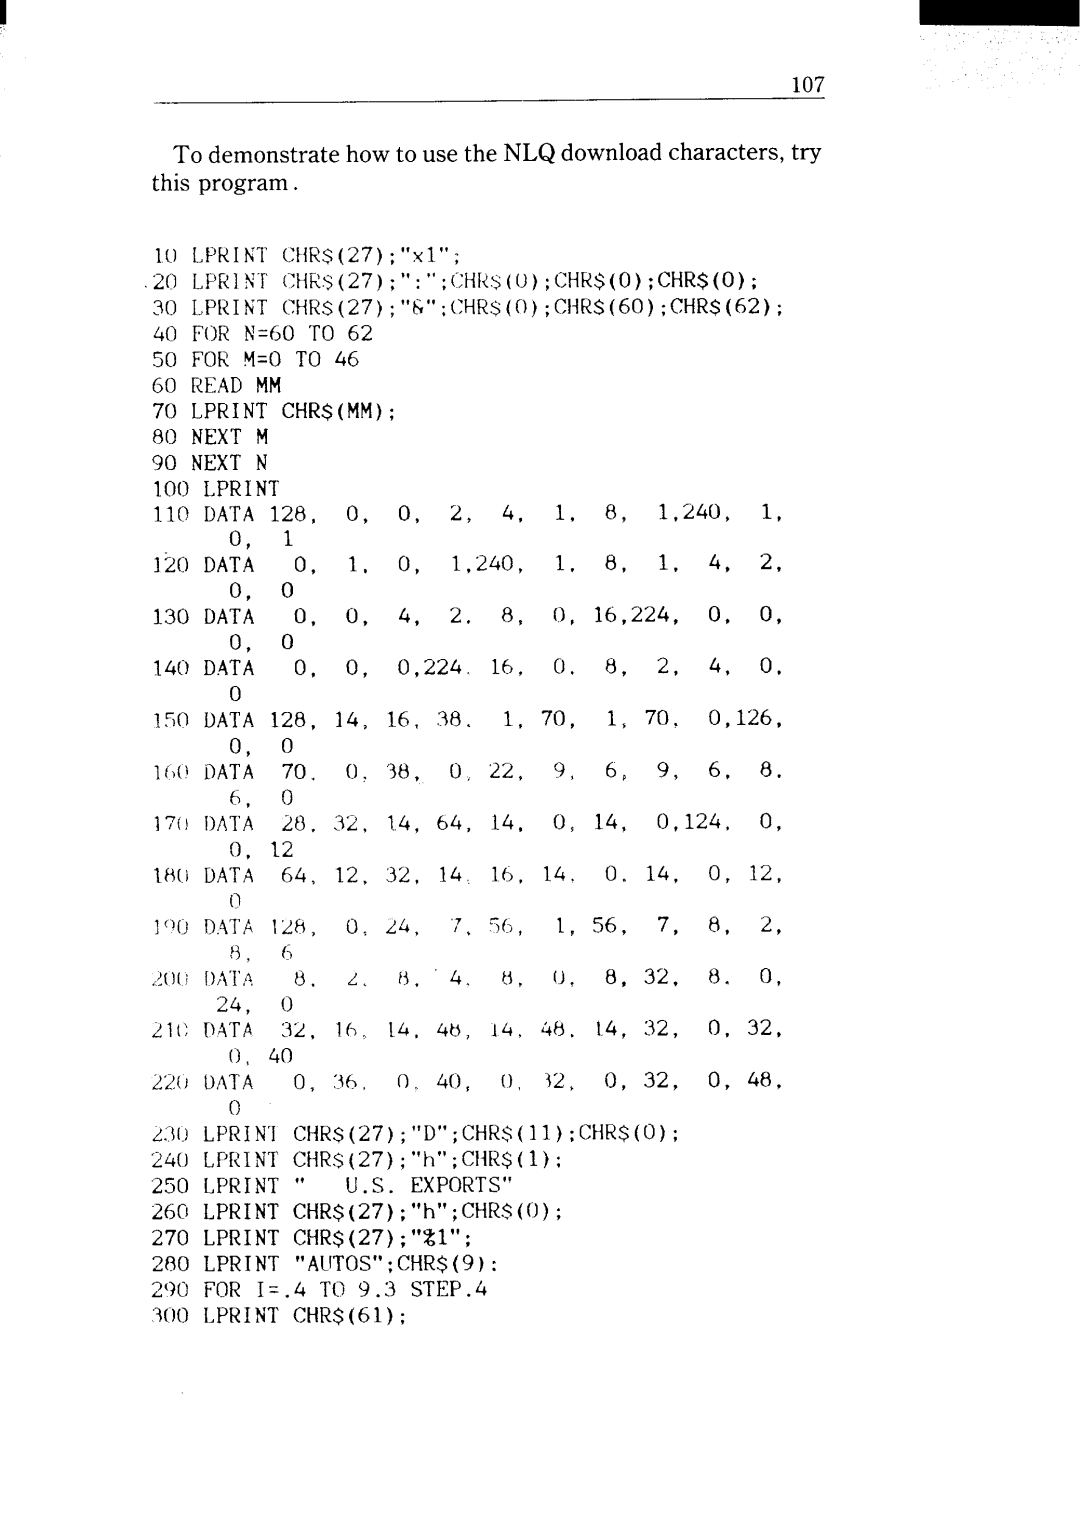 Star Micronics NX-15 user manual LPRINT CHR$27“&”CHR$0CHR$60 CHR$62, FOR M=OTO 60 READ MM, 4, 48, 14. 48, 1.4 